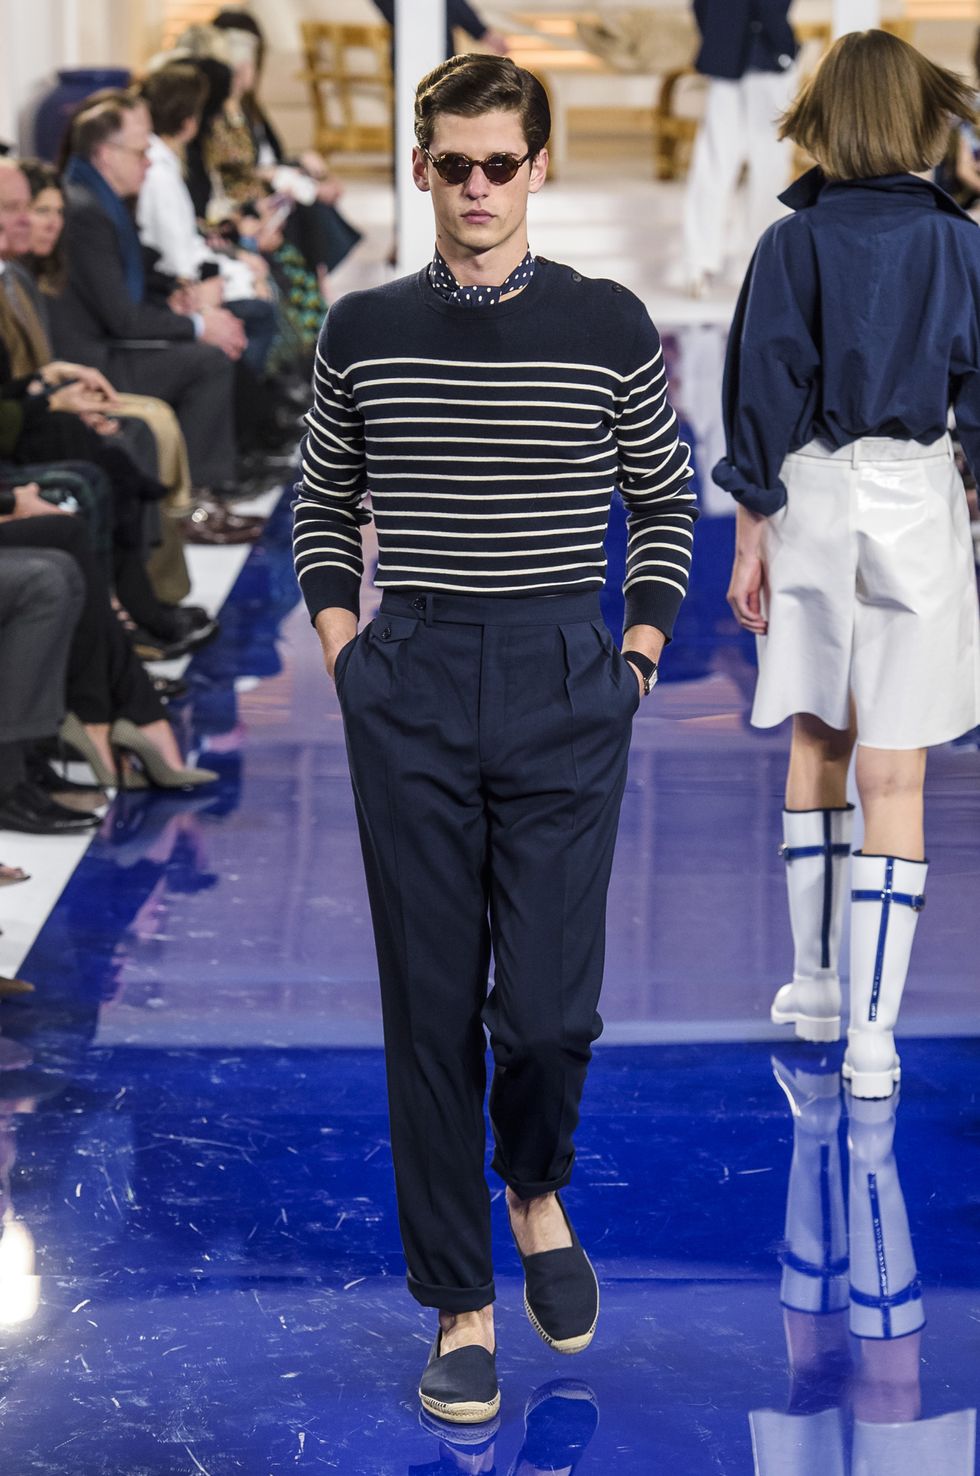 Lauren Ralph Lauren Clothing for Women - Louis Vuitton Stripe